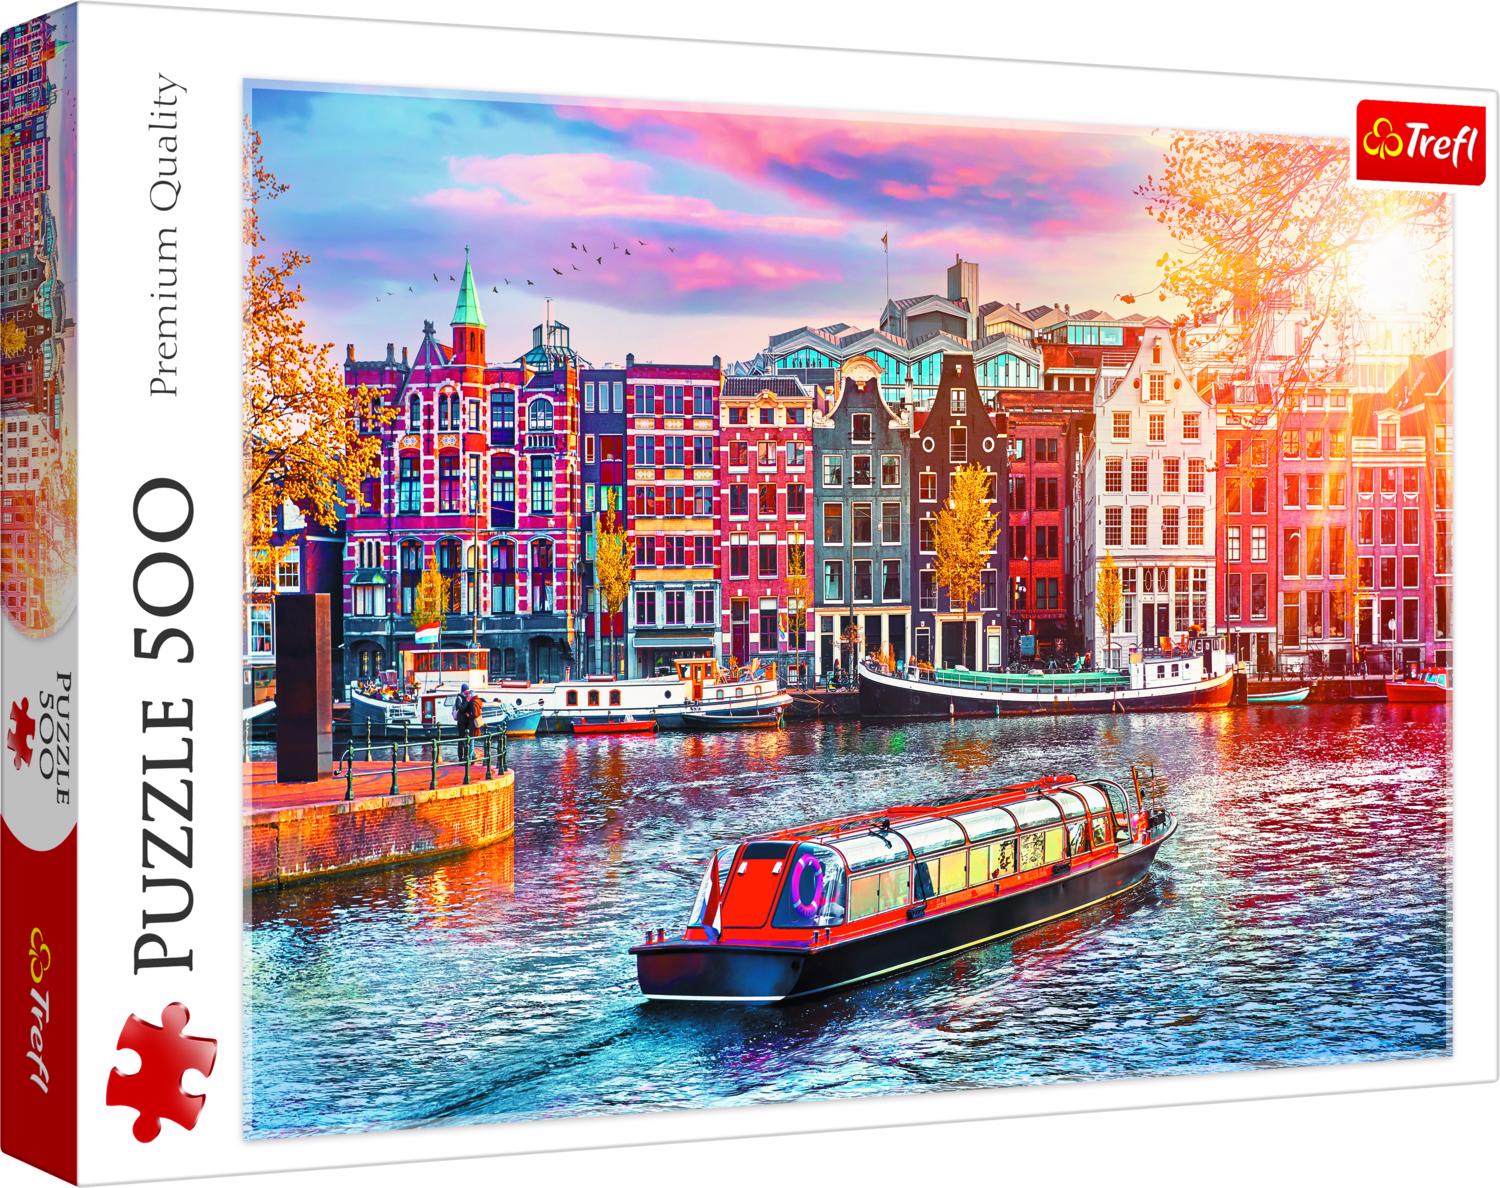 Puzzle Amsterdam, Nederland